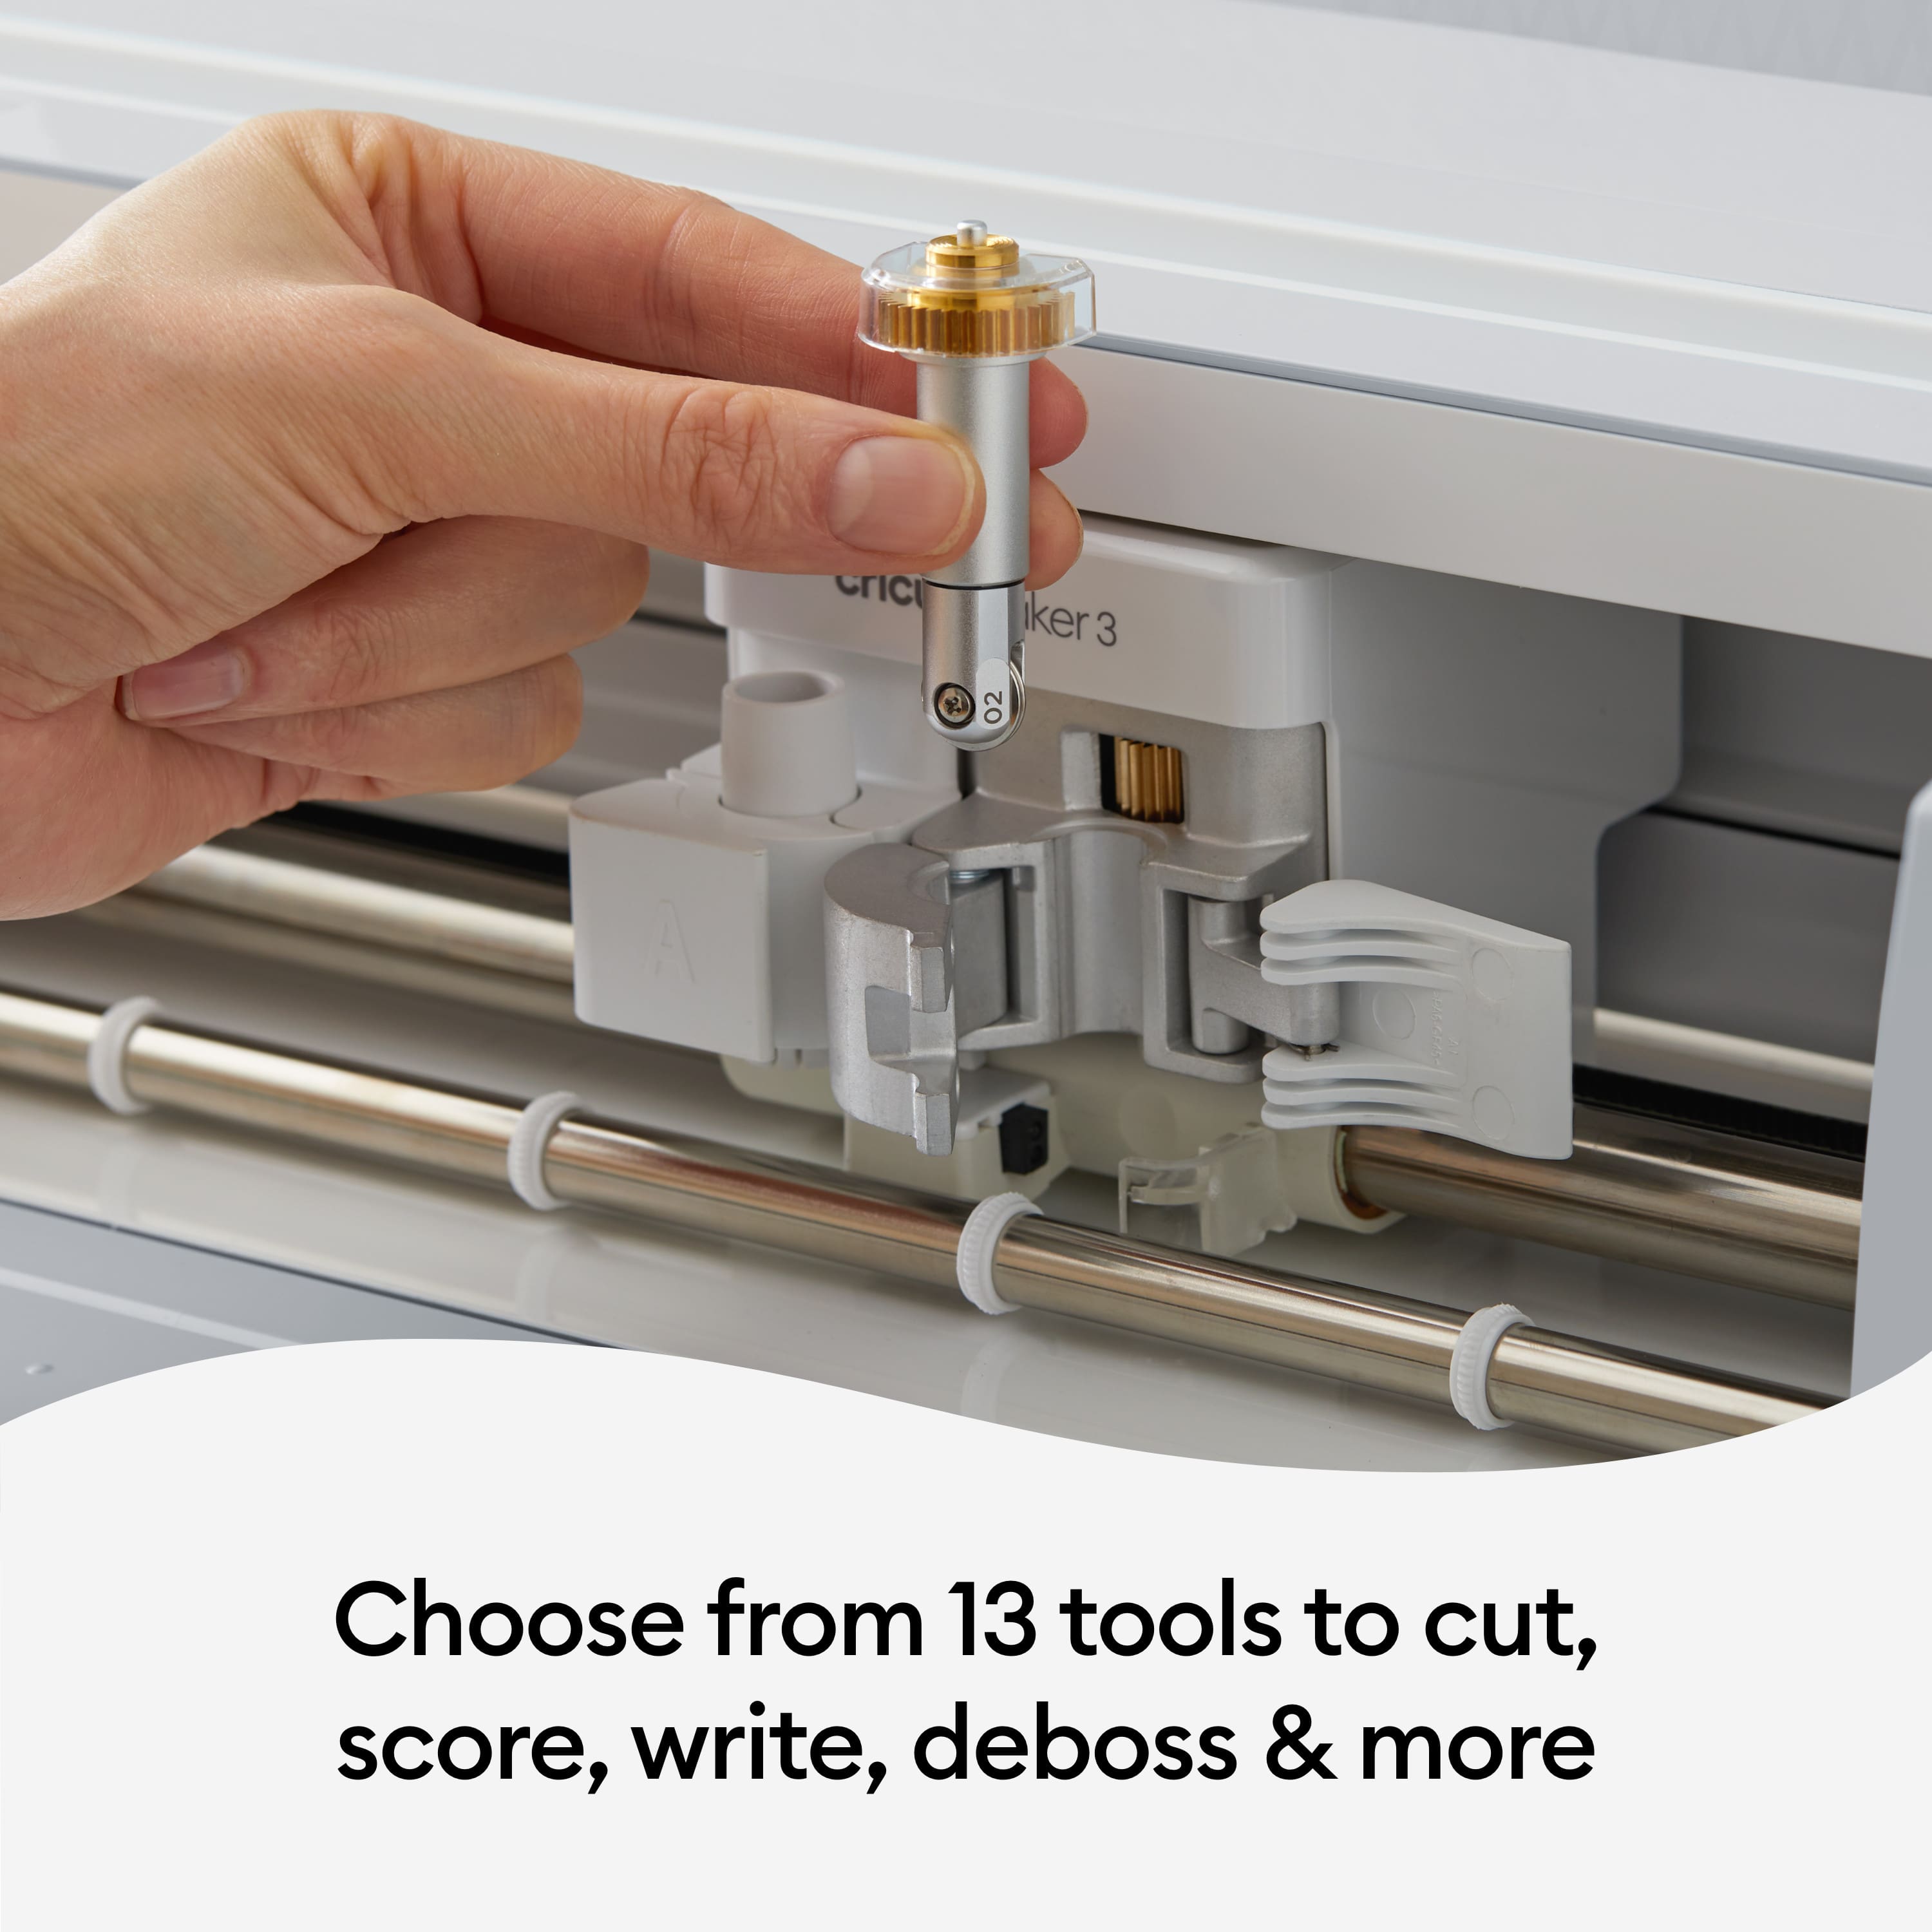 Cricut Maker 3 Ultimate Smart Cutting Machine with Adaptive Tool System